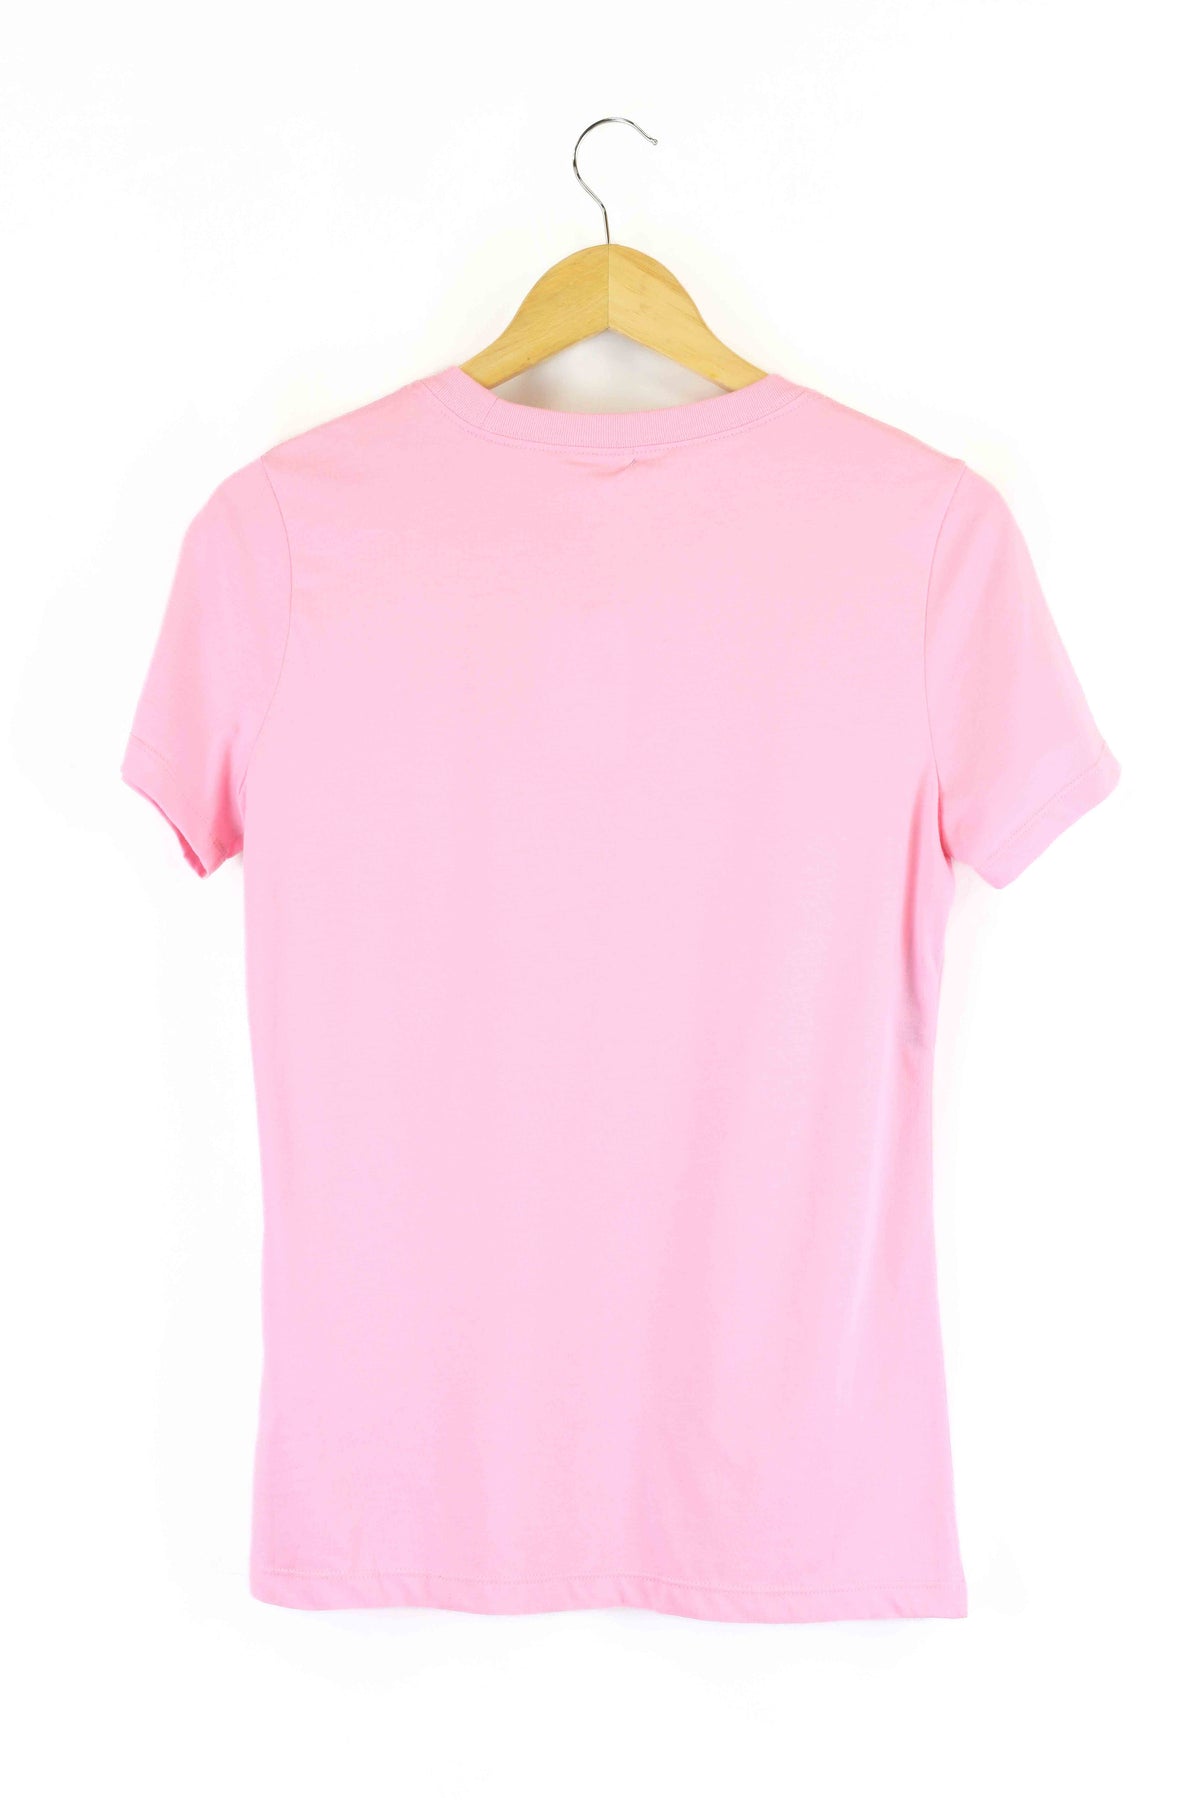 Nike Pink T-shirt S